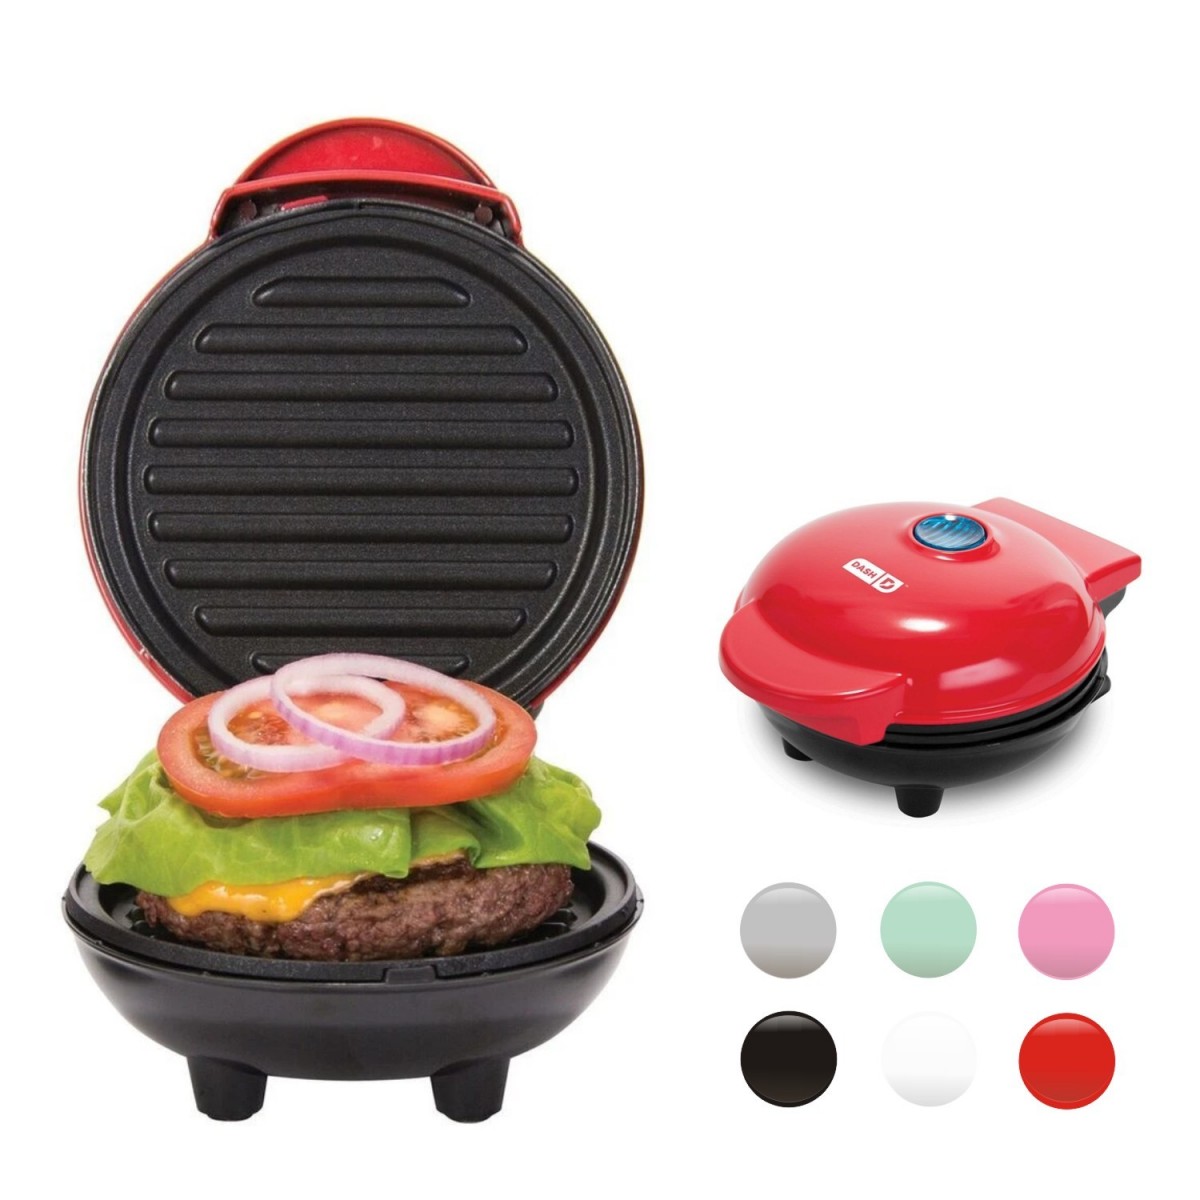 ⭐ Dash Mini Maker Grill Parrilla hamburguesa Electric Grill Color Rojo  Voltaje 110V